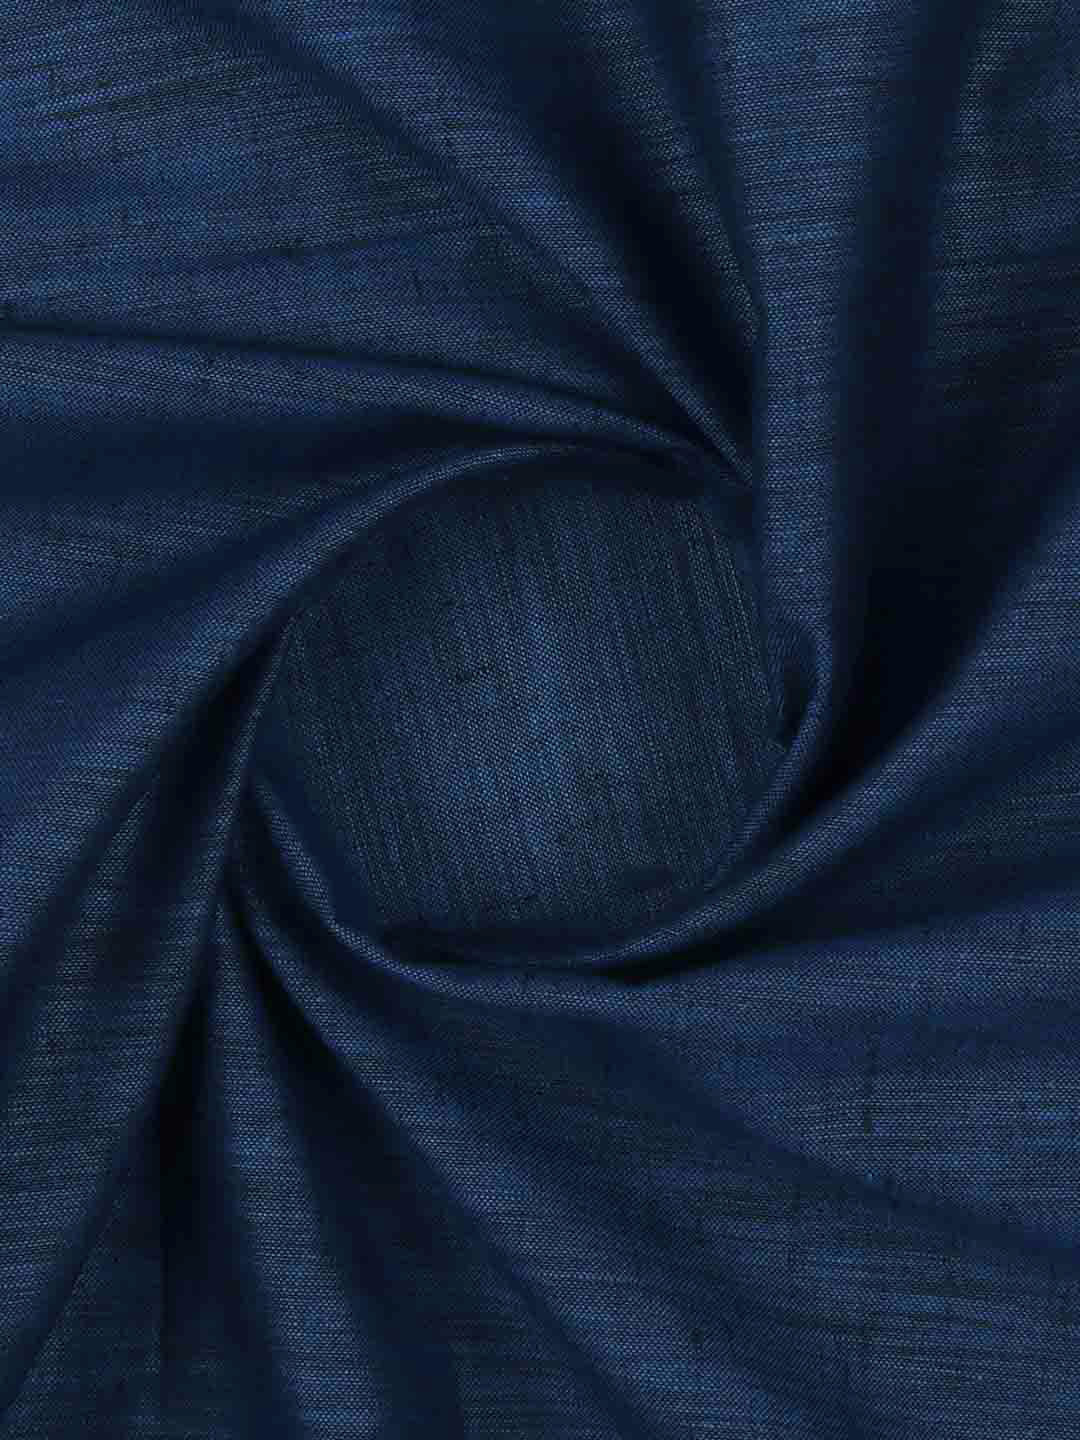 Cotton Blend Navy Colour Plain Shirt Fabric Infinity